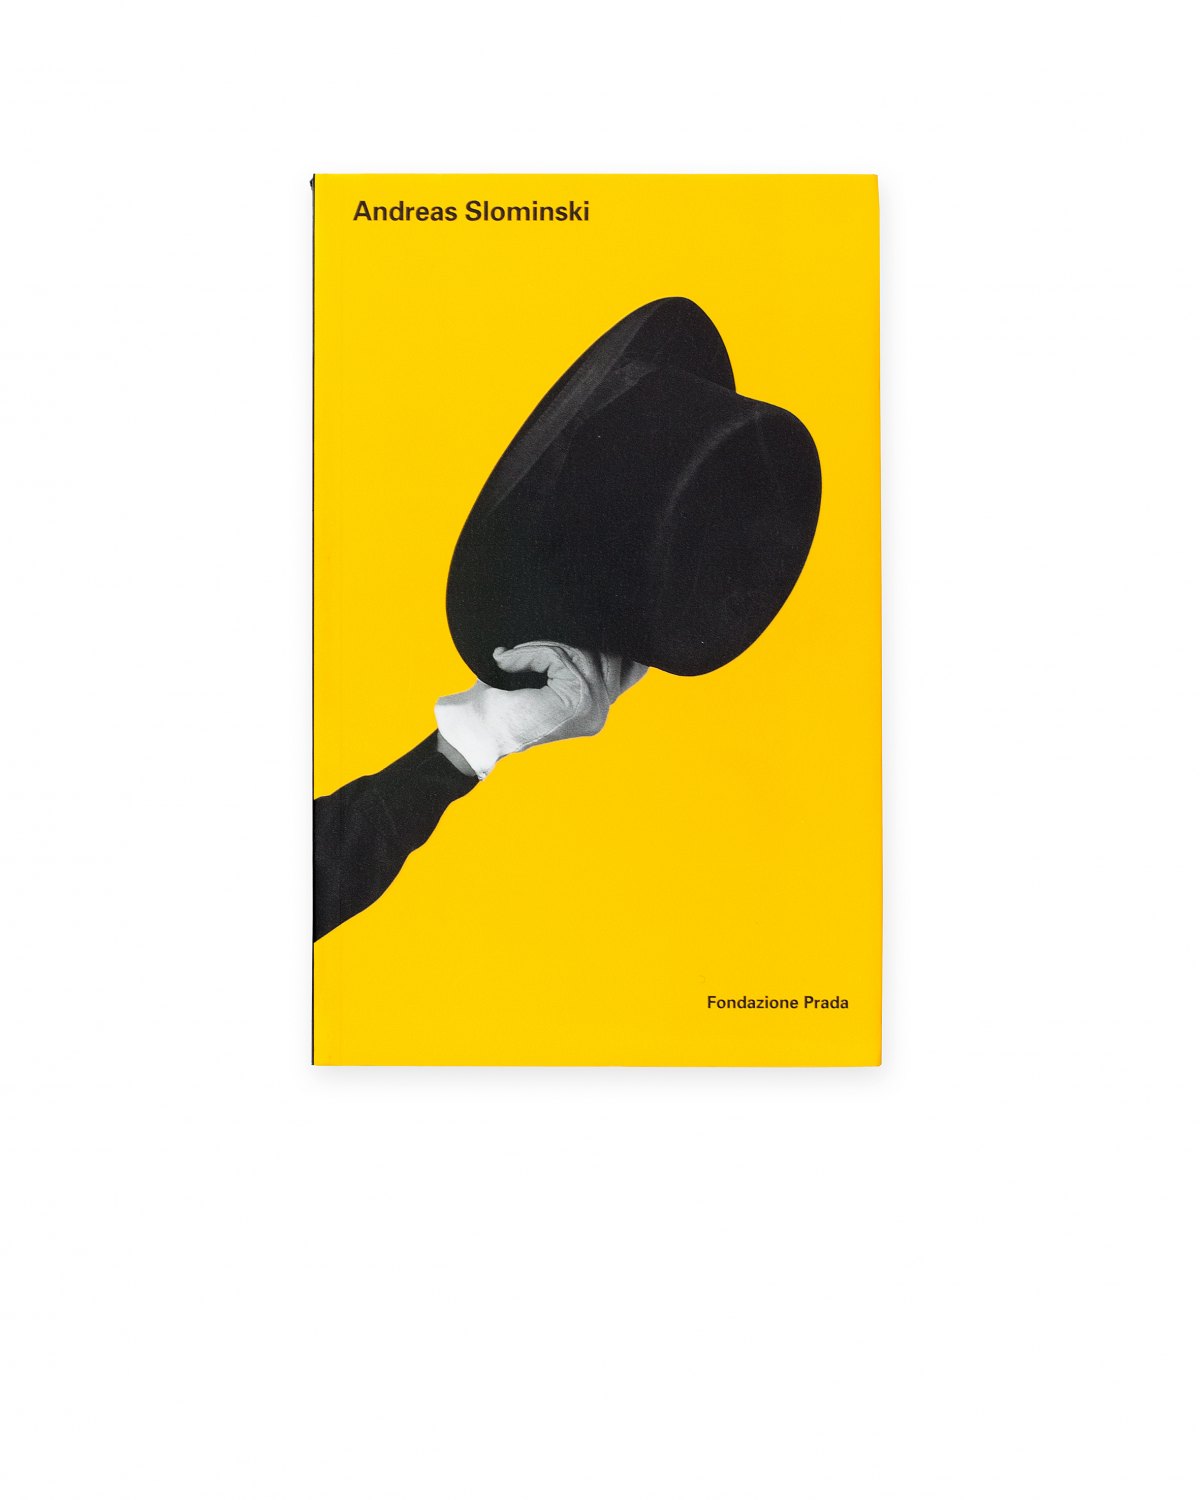 Andreas Slominski. Fondazione Prada  ed. by Germano Celant, Catalogue, Fondazione Prada, Milan 2006, 224 p.  ISBN 978-8-88702-934-5